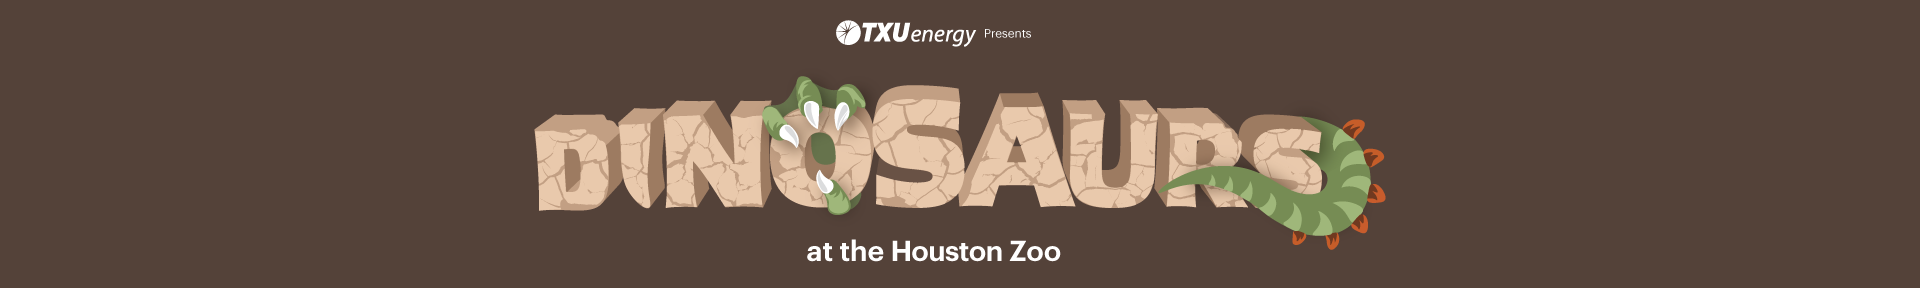 Dinosaurs Exhibit at Houston Zoo